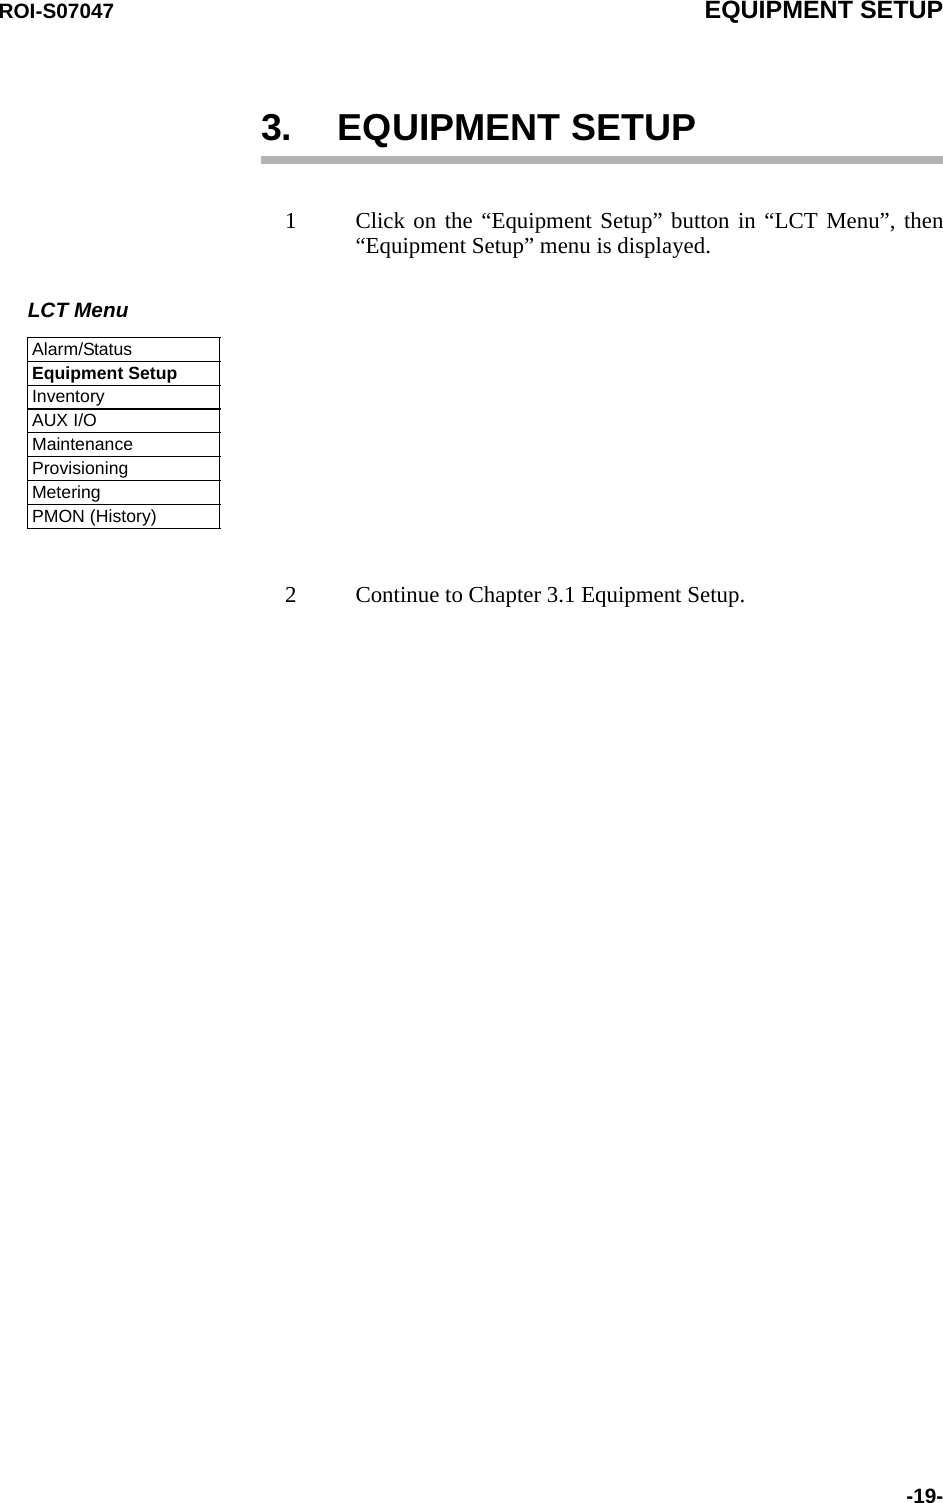 ROI-S07047 EQUIPMENT SETUP-19-3. EQUIPMENT SETUP1 Click on the “Equipment Setup” button in “LCT Menu”, then“Equipment Setup” menu is displayed. 2 Continue to Chapter 3.1 Equipment Setup. LCT MenuAlarm/StatusEquipment SetupInventoryAUX I/OMaintenanceProvisioningMeteringPMON (History)